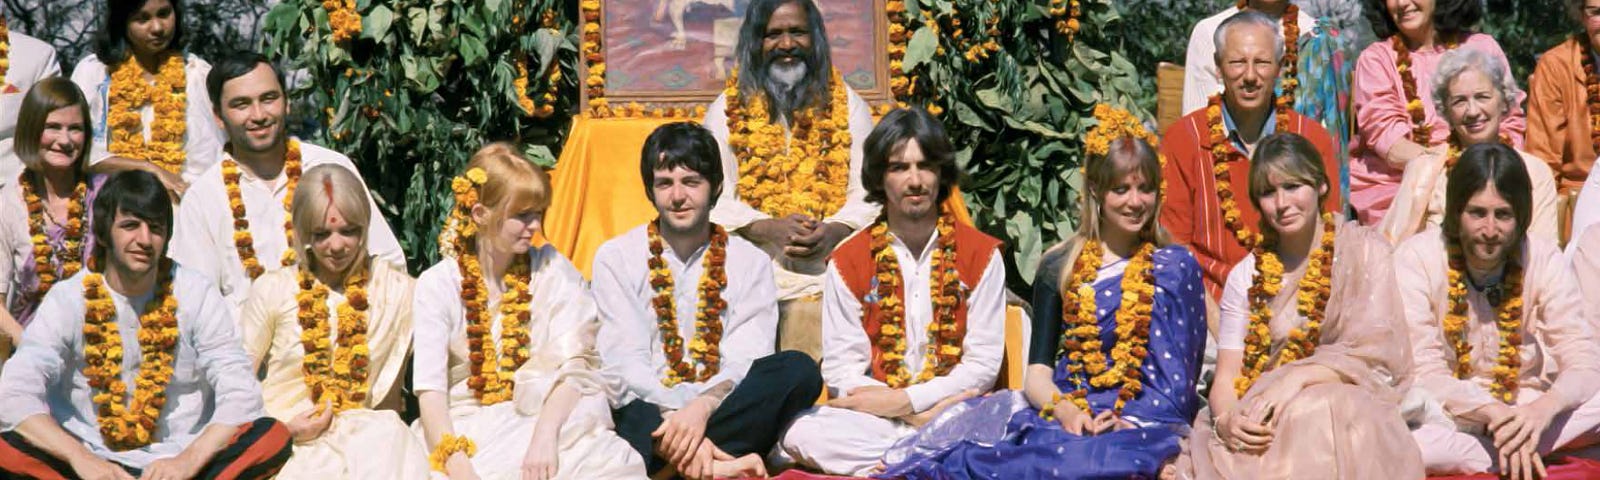 The Beatles in India (Rishikesh) with Maharishi Mahesh Yogi. Credits: The Beatles